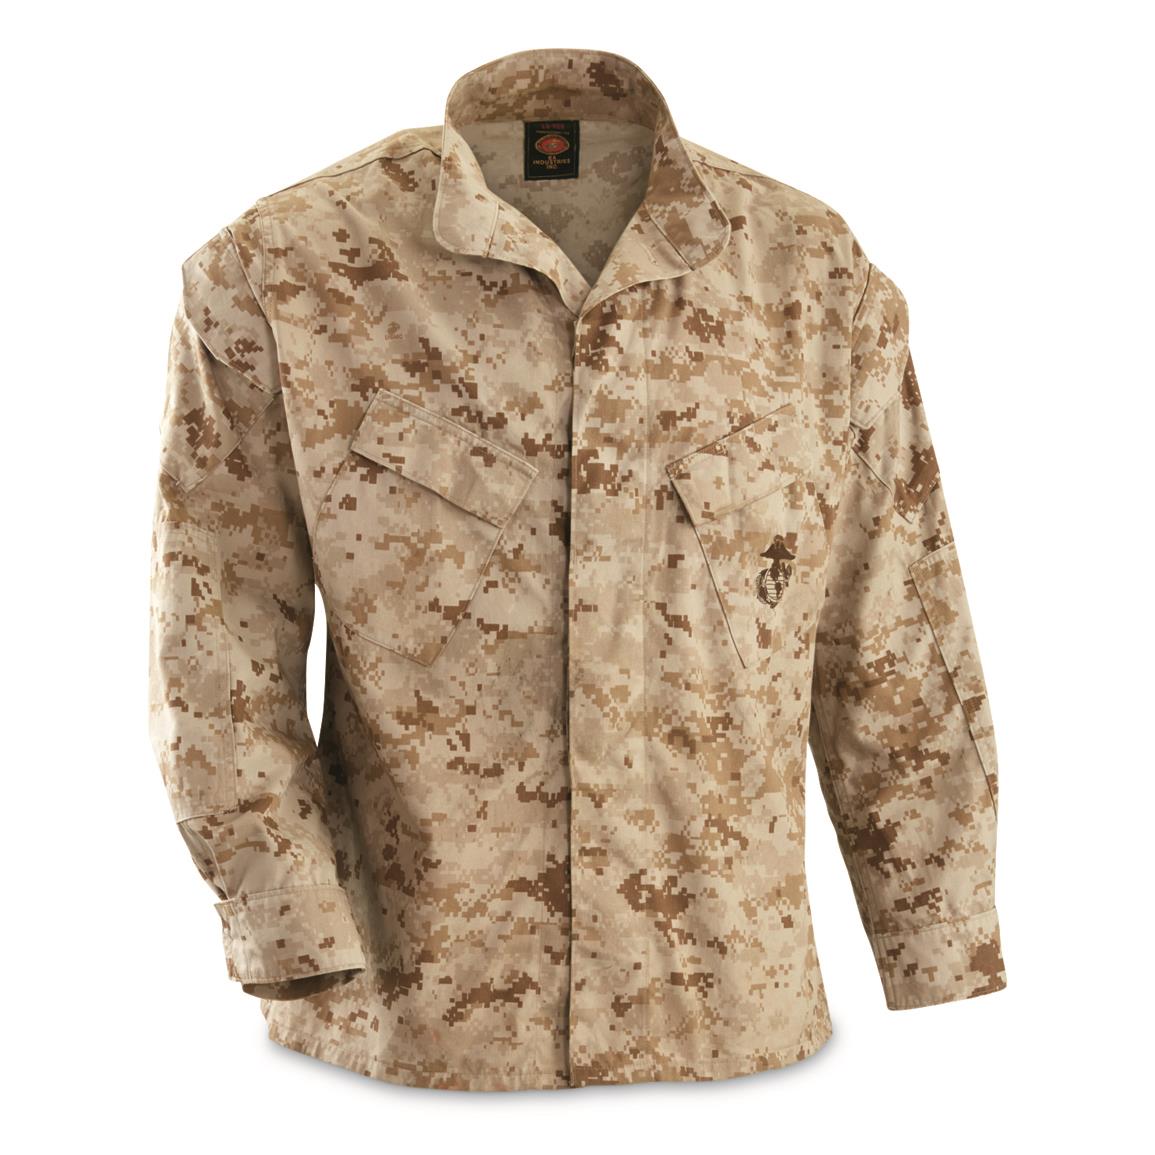 USMC Surplus MARPAT BDU Shirt, Used, Desert Digital